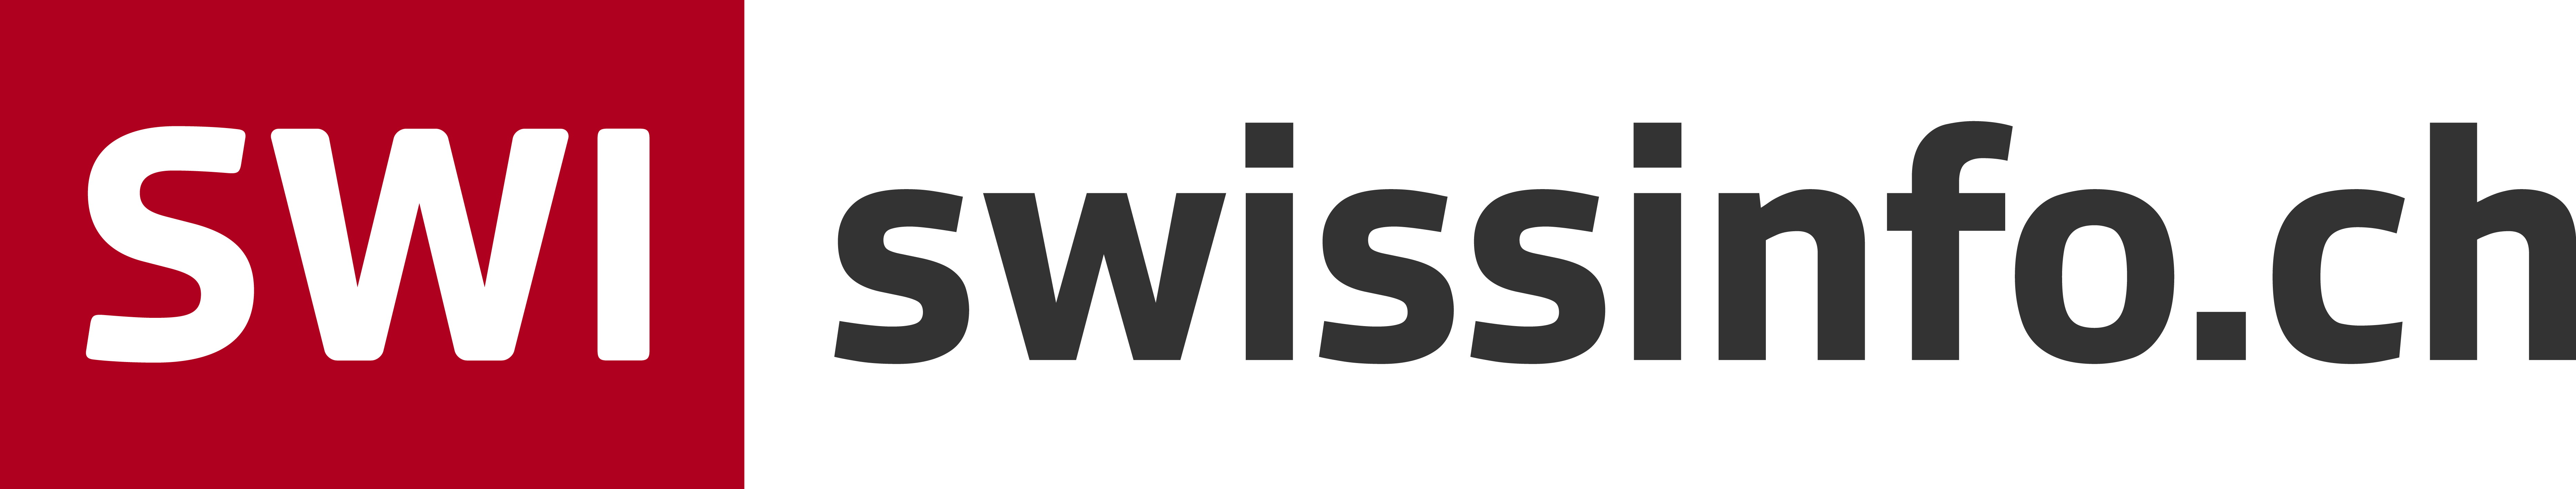 Tunesien-News.de - Tunesien Infos & Tunesien Tipps | SWI swissinfo.ch